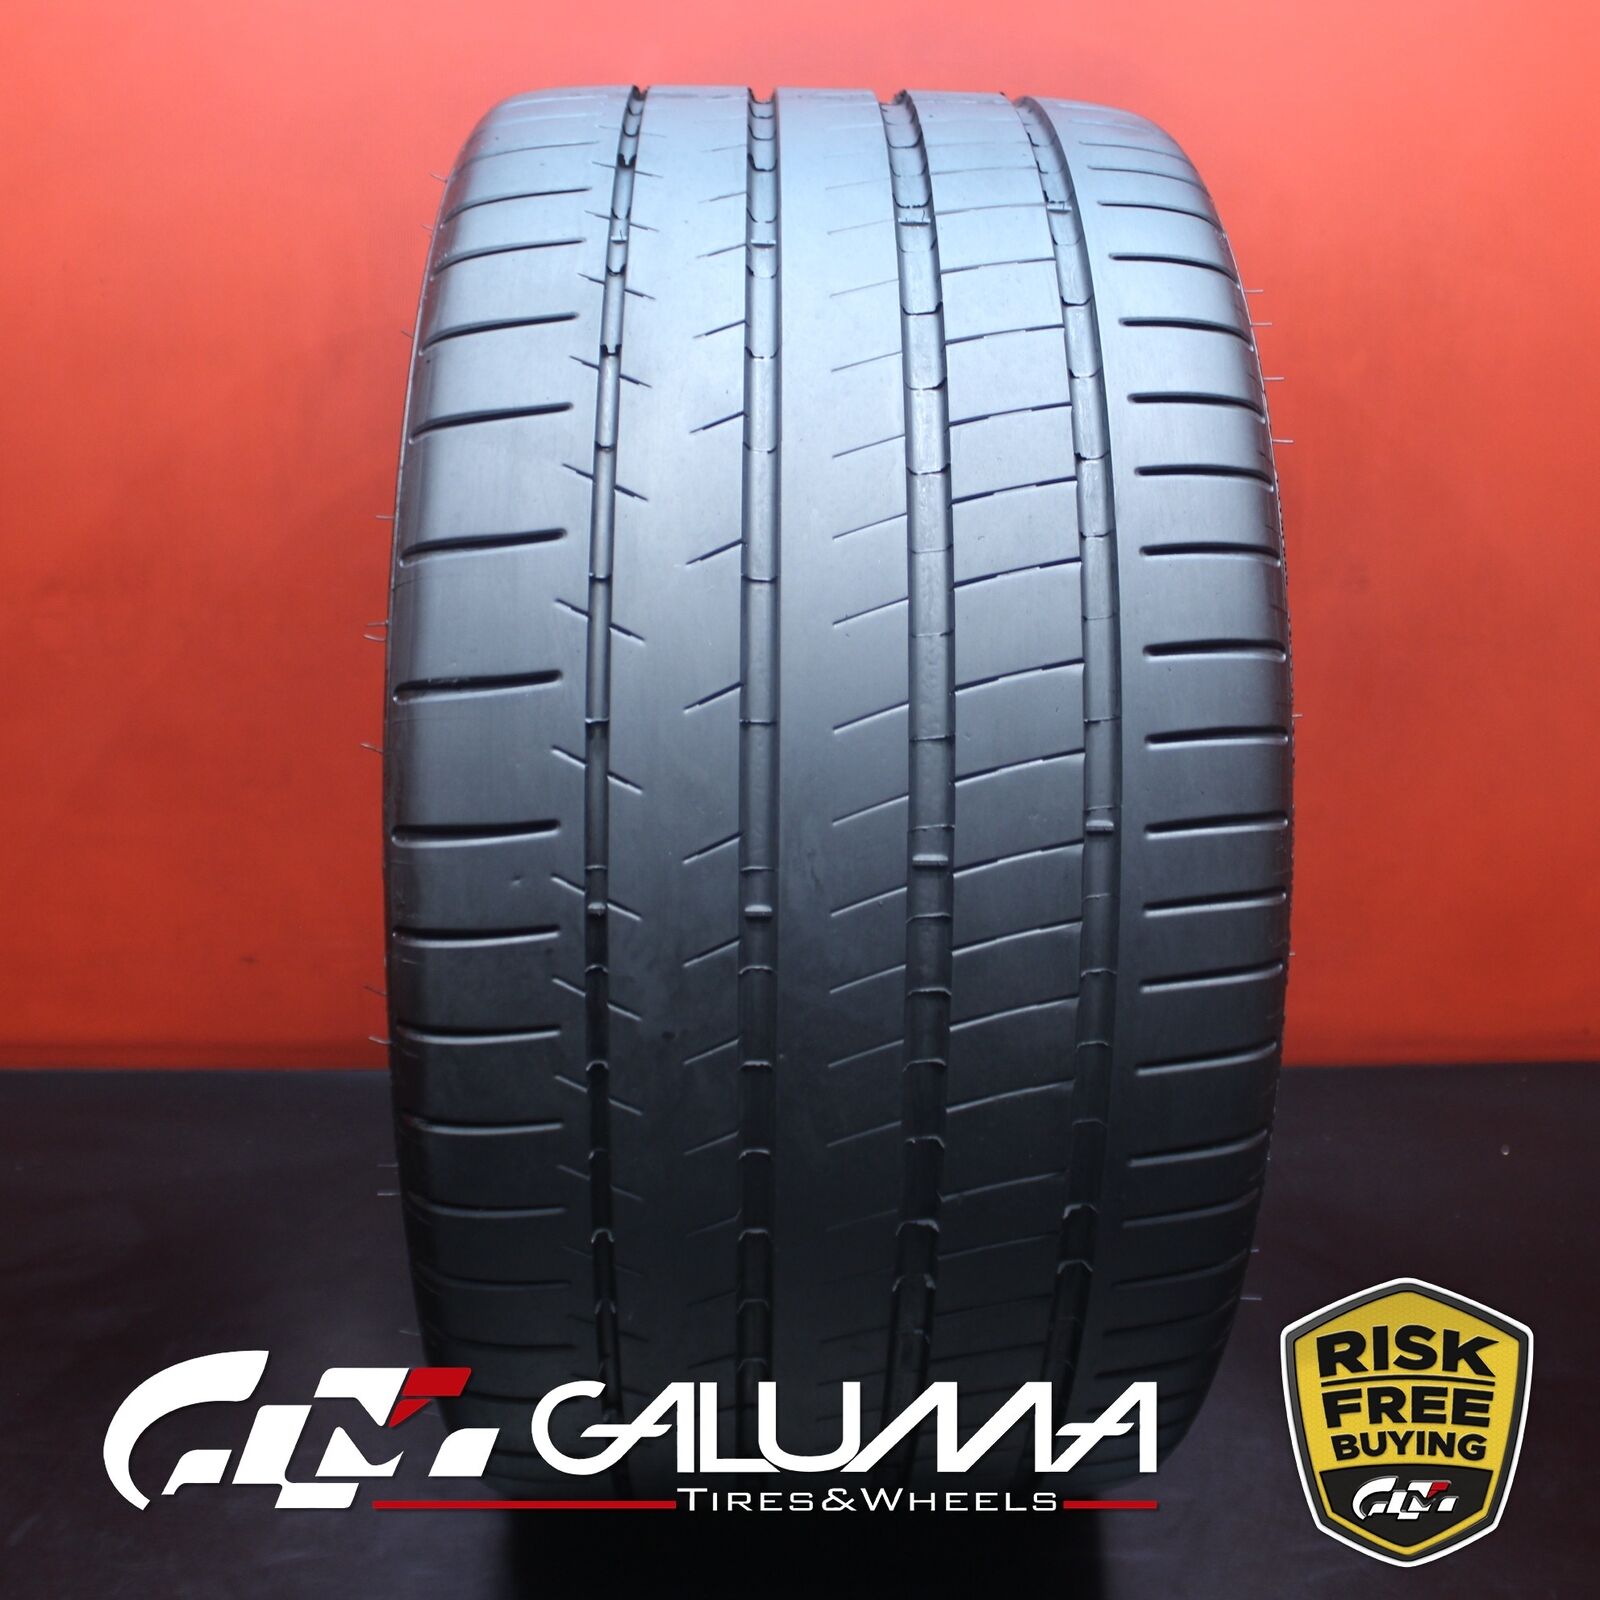 1 (One) Tire LikeNEW Michelin Pilot Super Sport 305/30ZR20 305/30/20 103Y #78337